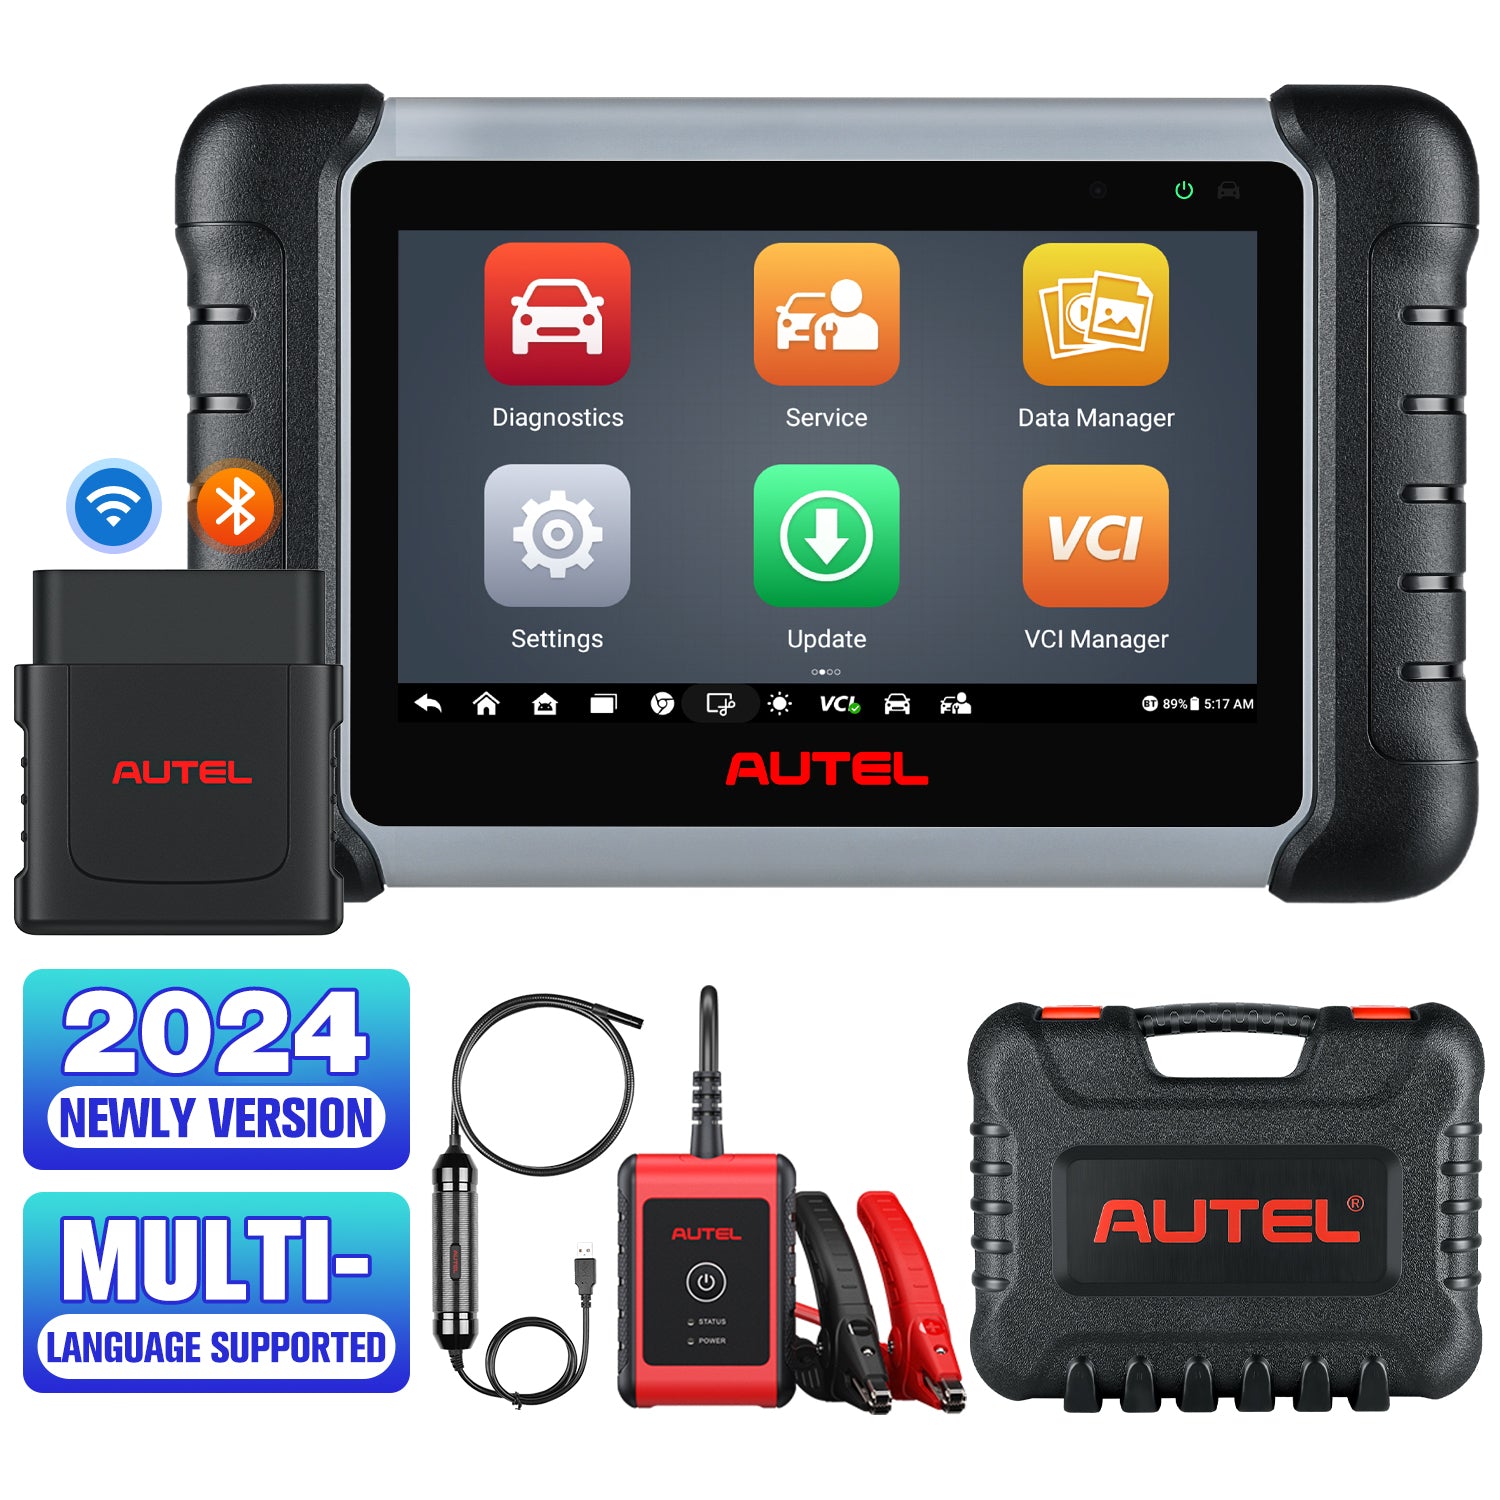 Autel MaxiCOM MK808BT PRO w/ $60 MV108S, Android 11, 2024 Full  Bidirectional Scan Tool, Update of MK808BT MK808S MX808S MX808 MK808Z, 28+  Services